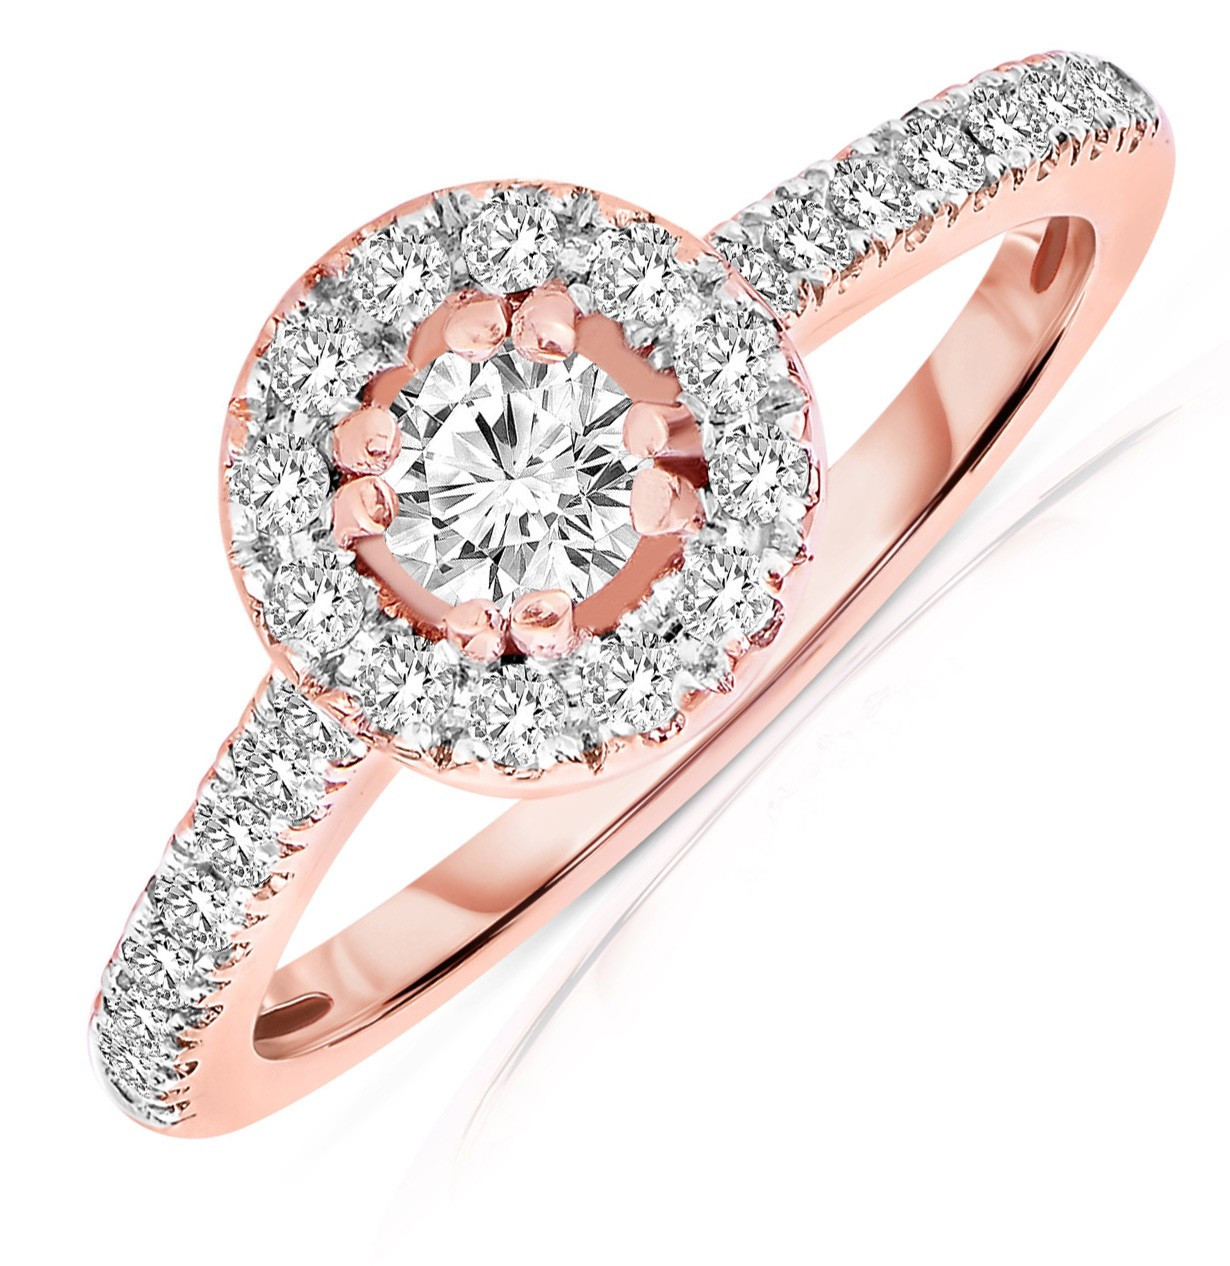 Rose Gold Halo Diamond Engagement Rings
 Half Carat Round cut Halo Diamond Engagement Ring in Rose